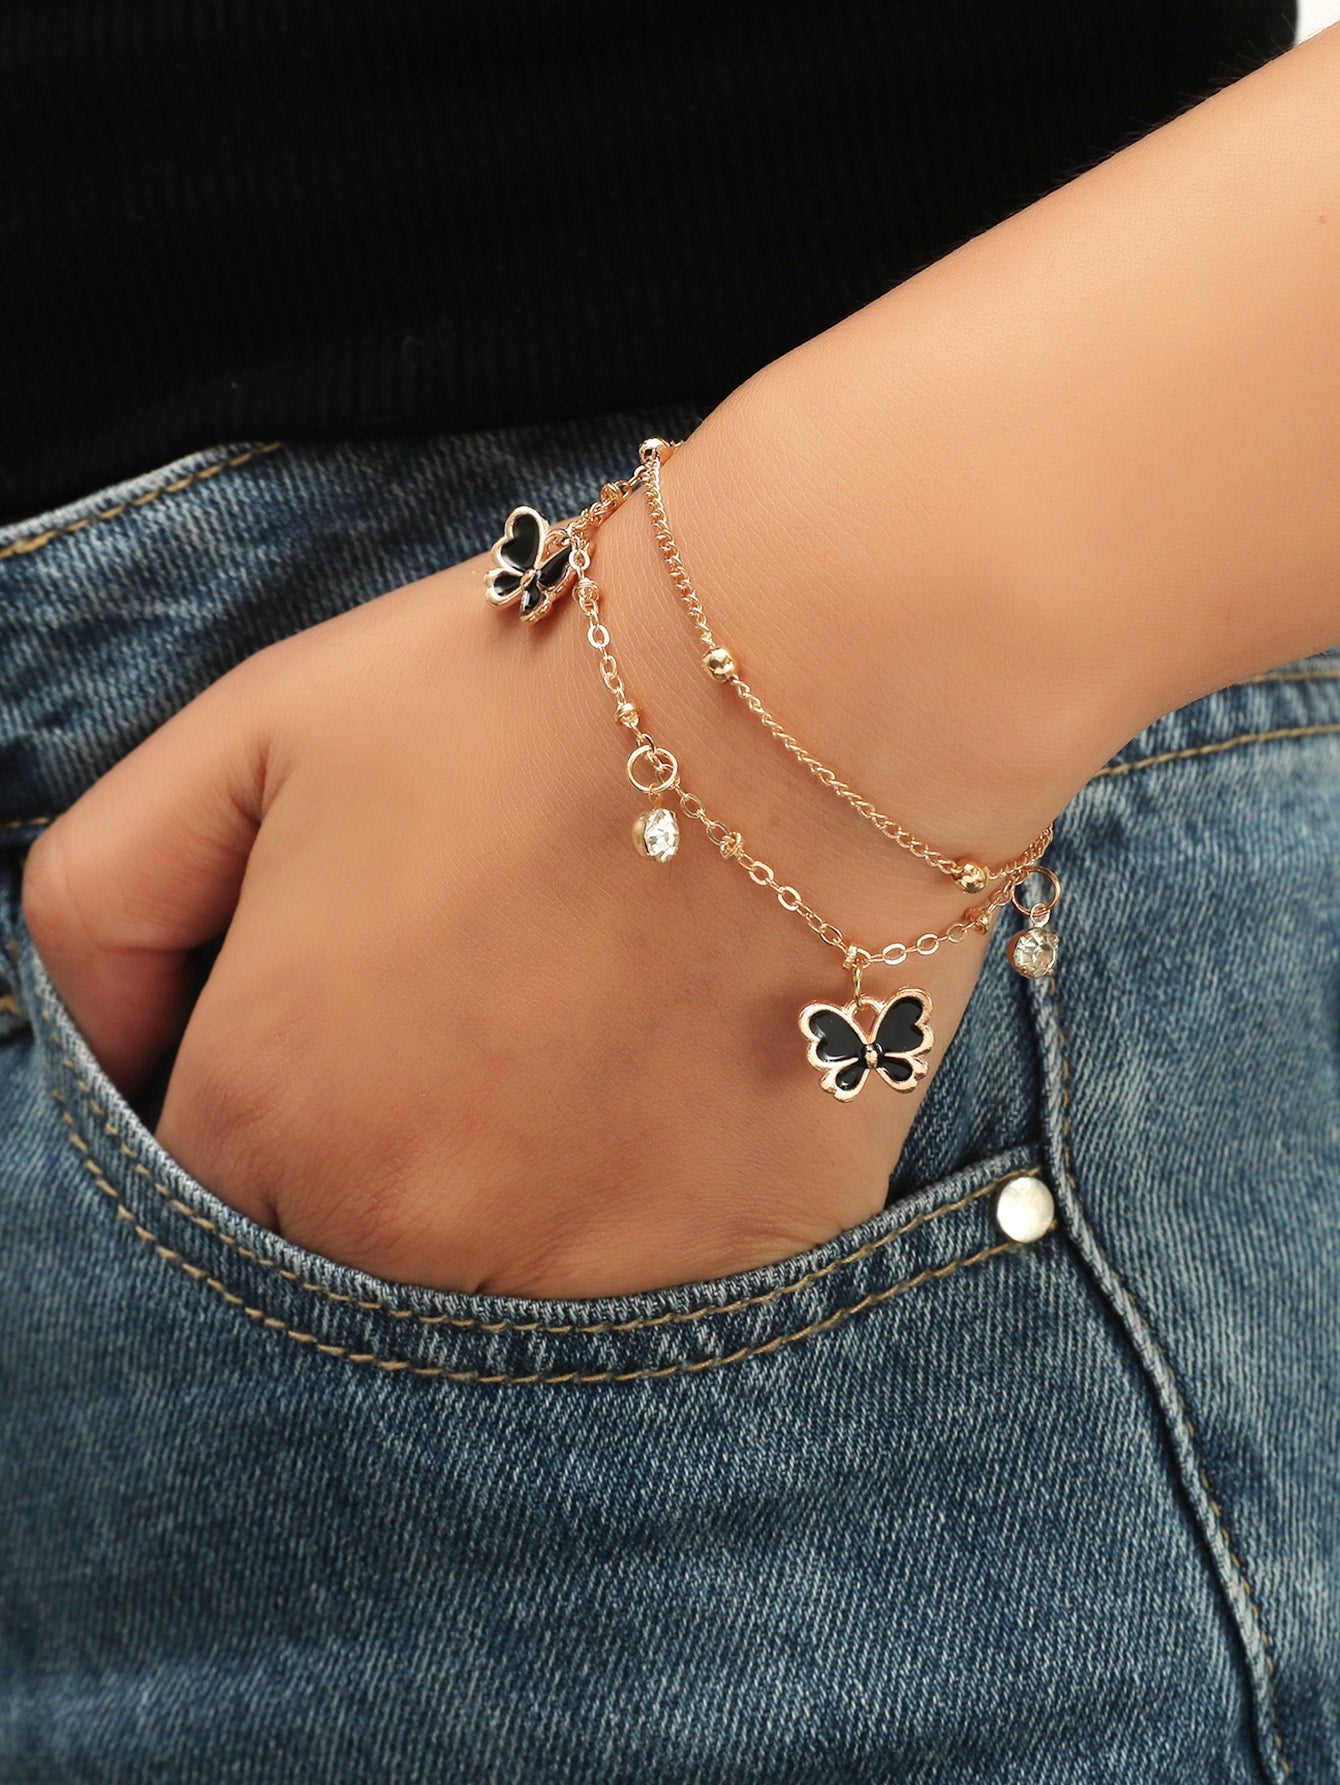 Butterfly Decor Layered Bracelet for Women Girls Jewelry Fashion